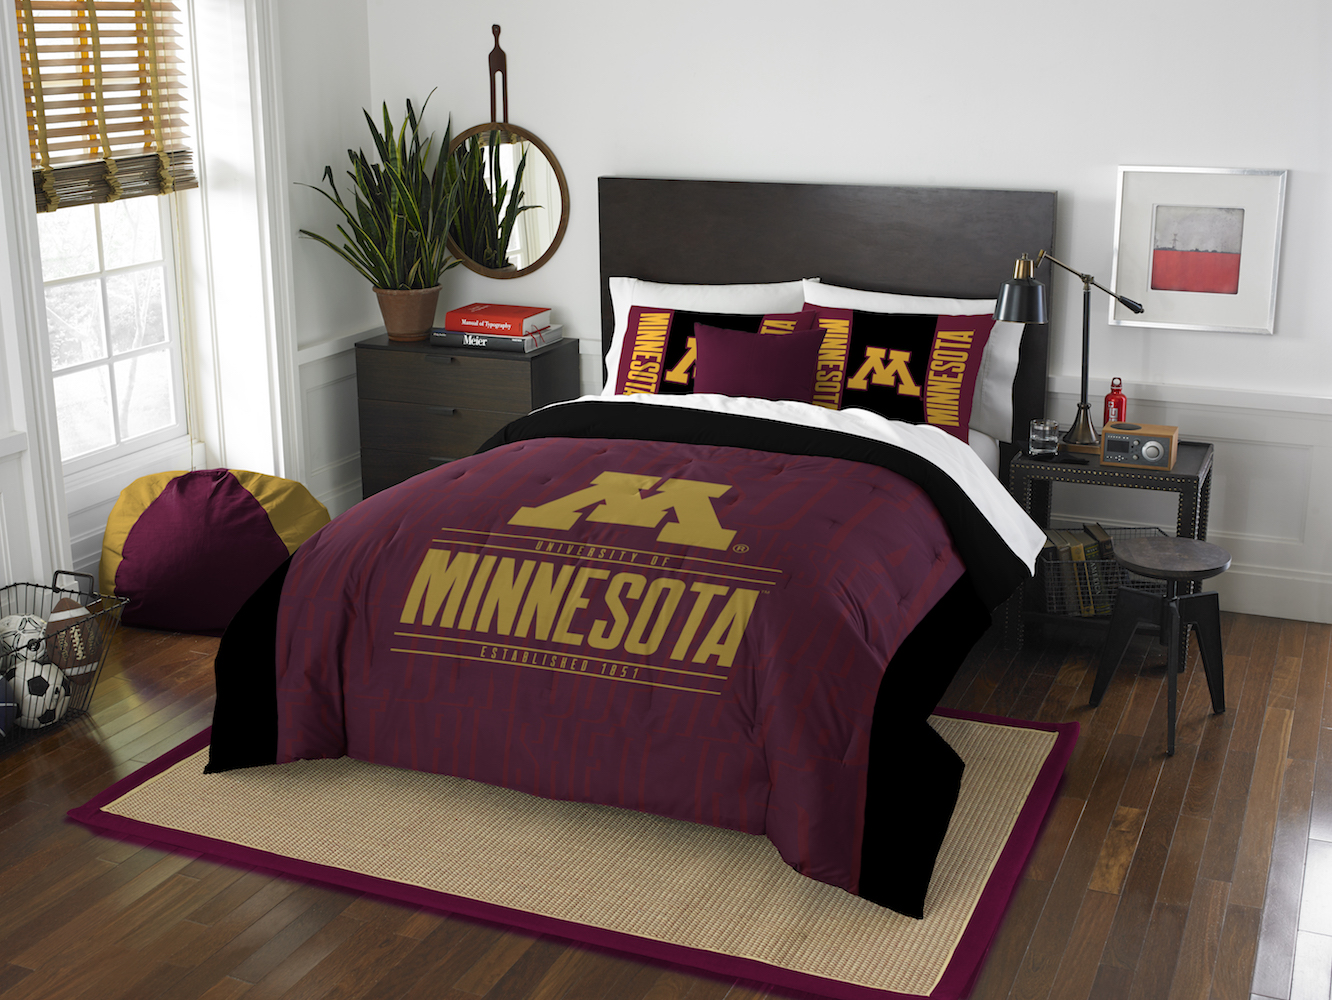 Minnesota Golden Gophers QUEEN/FULL size Comforter and 2 Shams